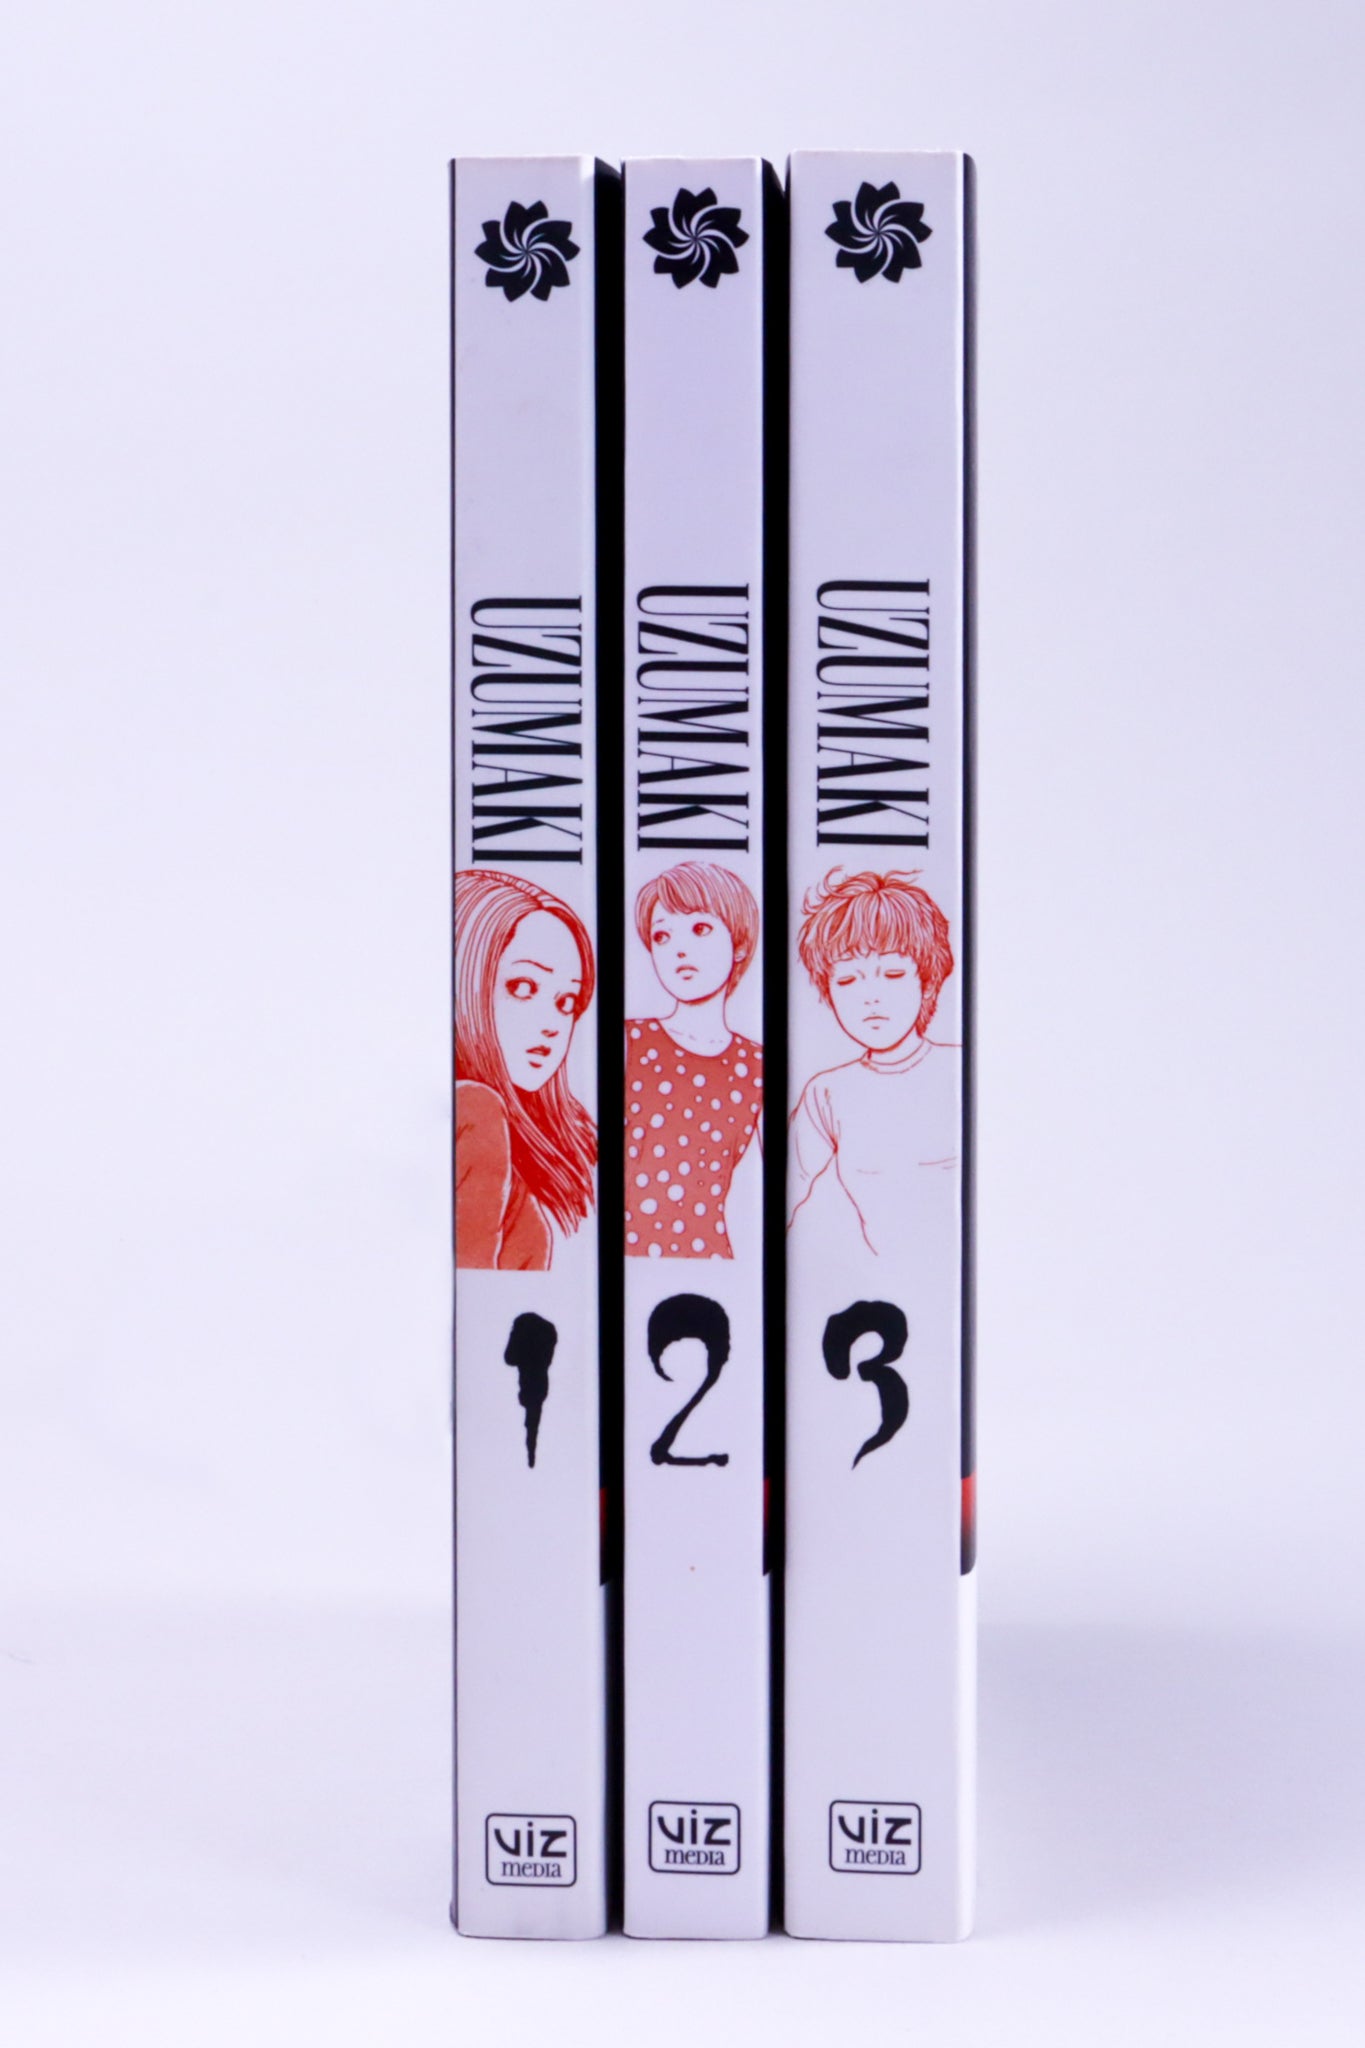 Uzumaki Complete 1st Press Set